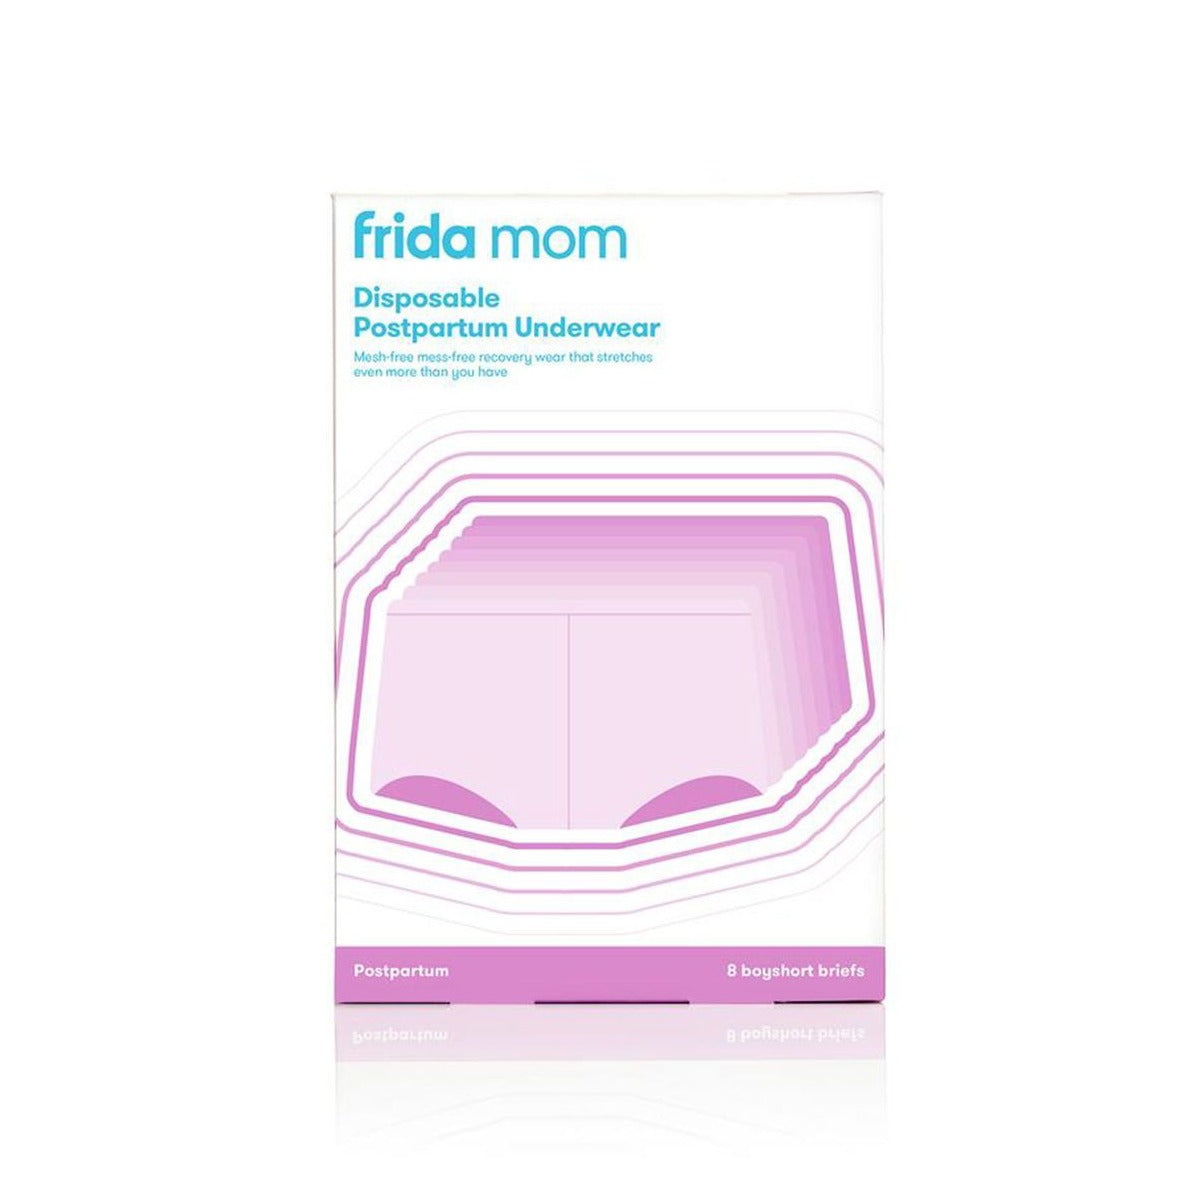 frida mom disposable postpartum underwear brandon manitoba